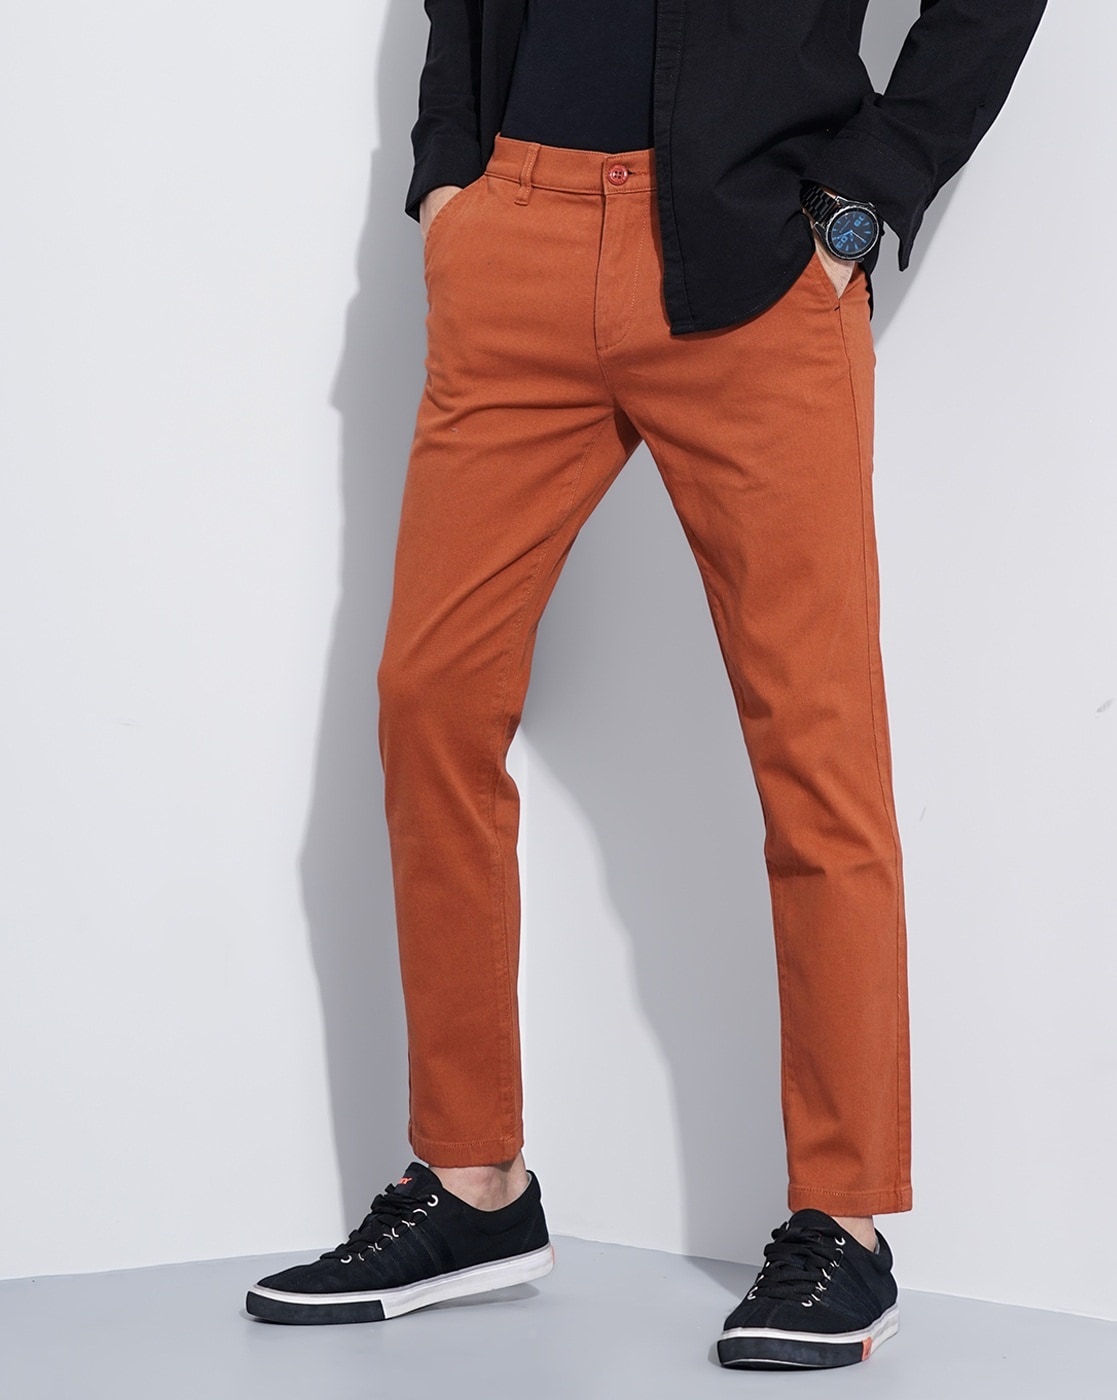 Mens Orange Pants Outfits35 Best Ways to Wear Orange Pants